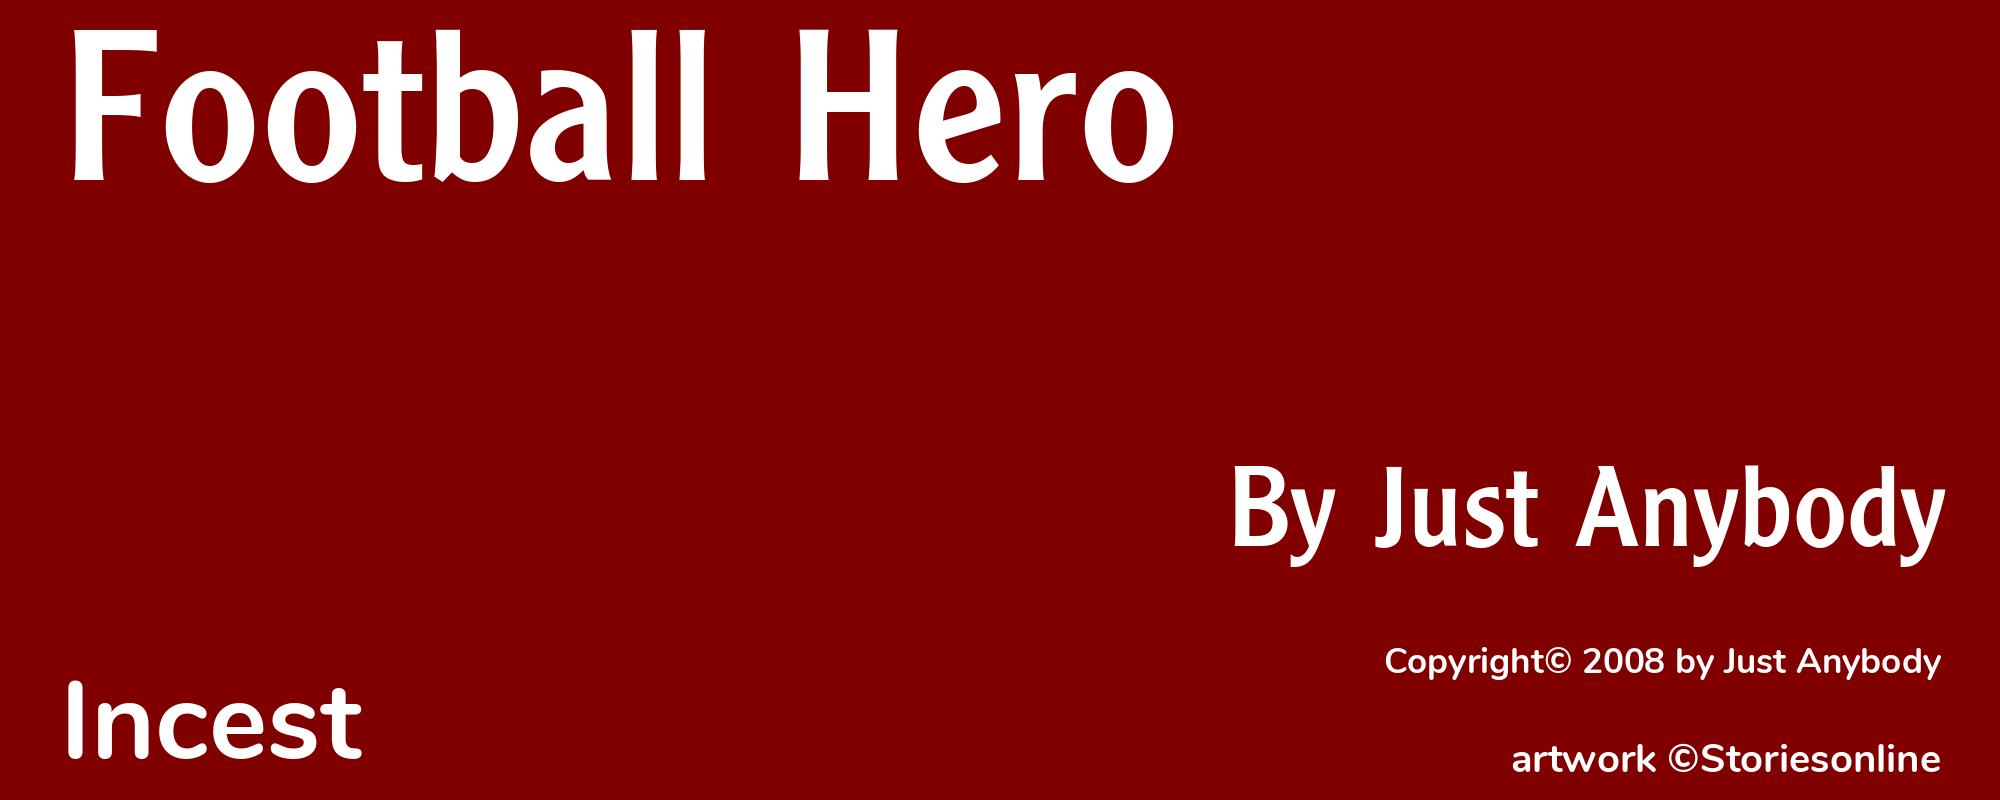 Football Hero - Cover